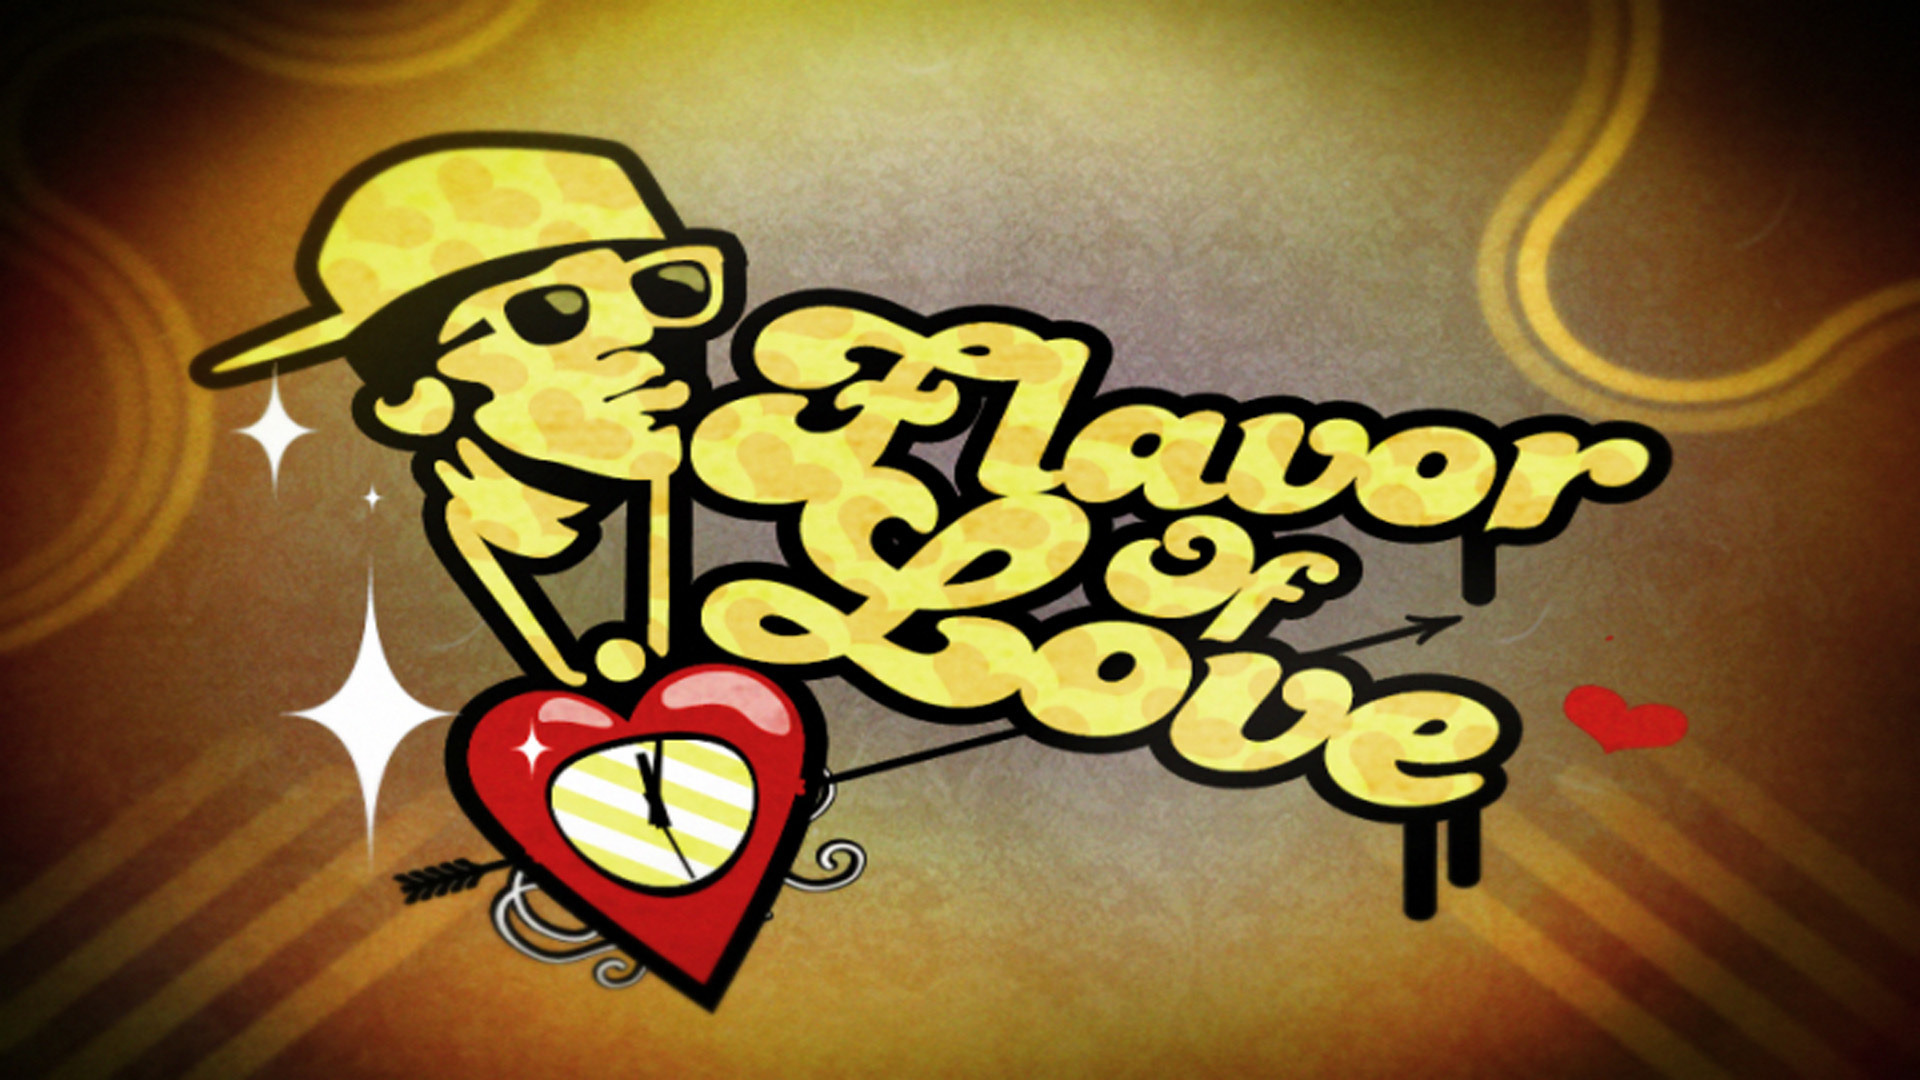 Show Flavor of Love